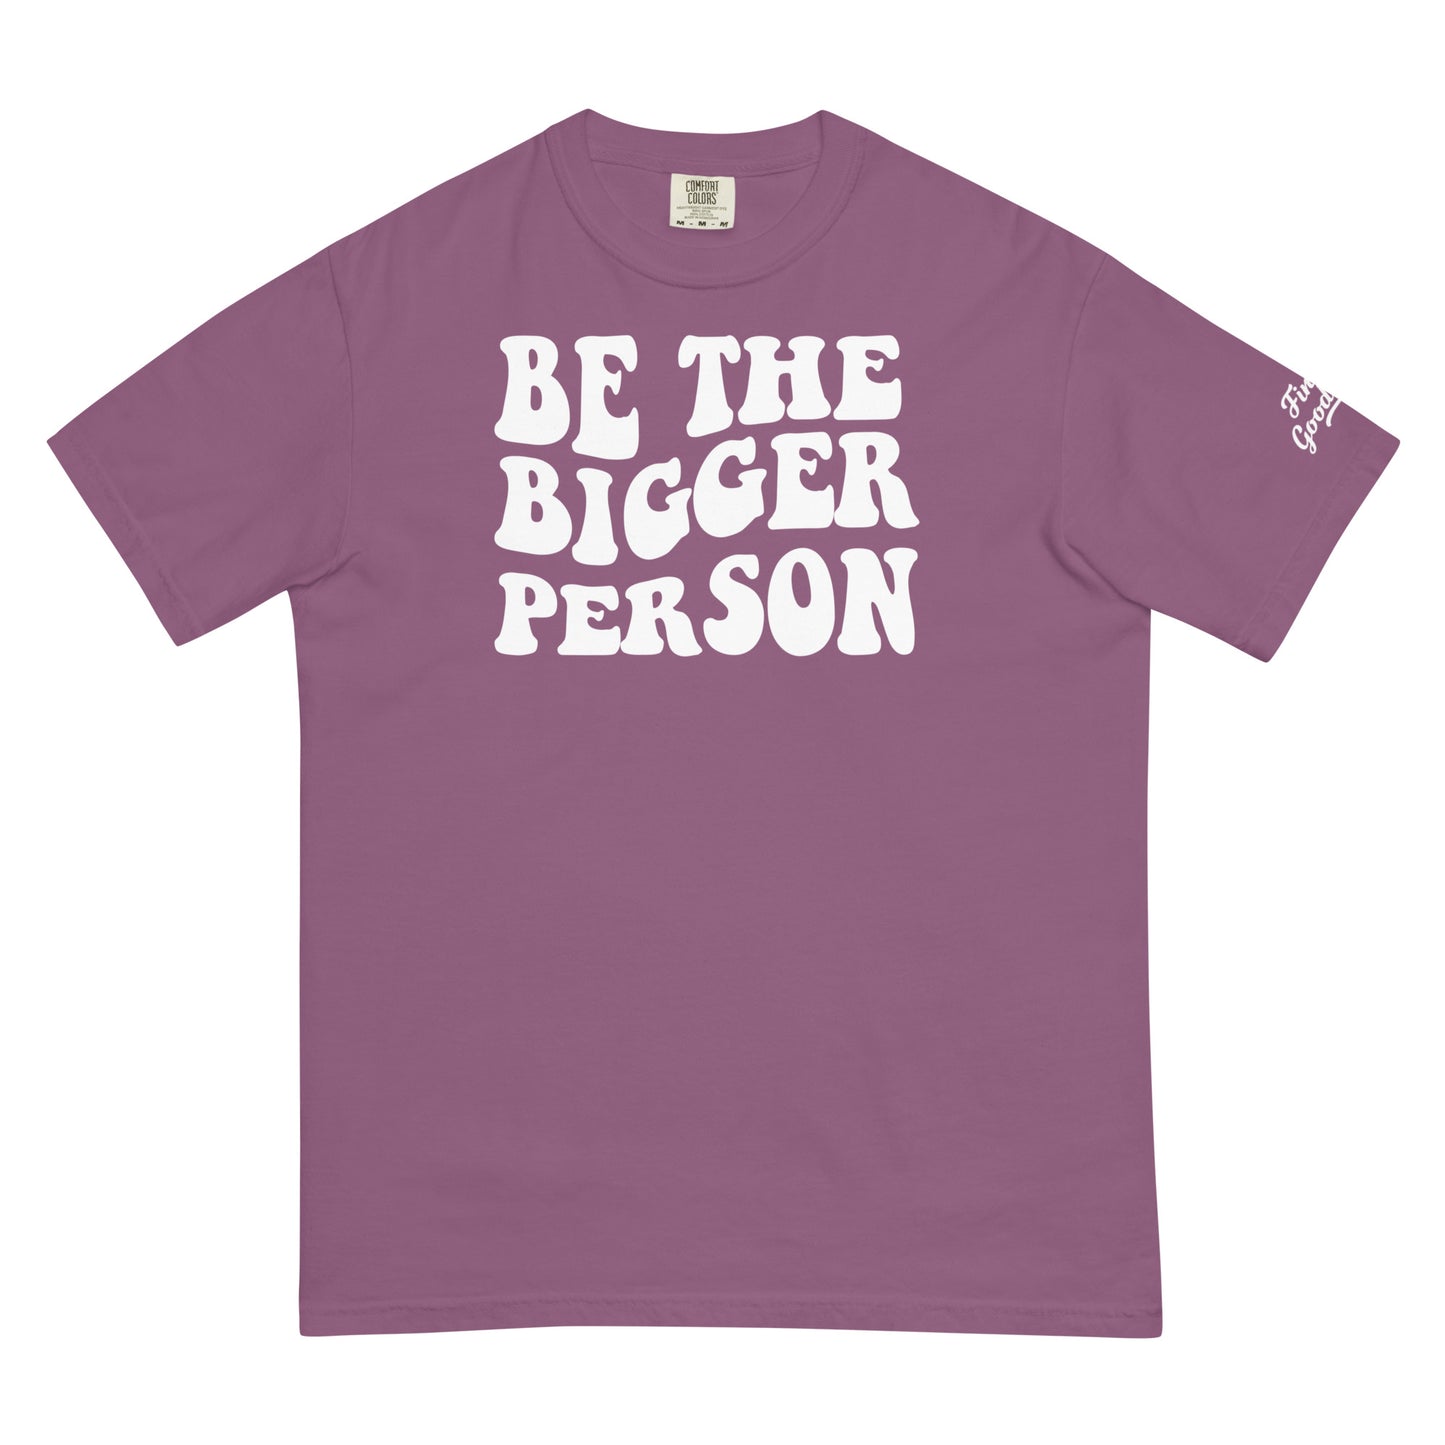 Boyfriend "Be the Bigger Person" t-shirt